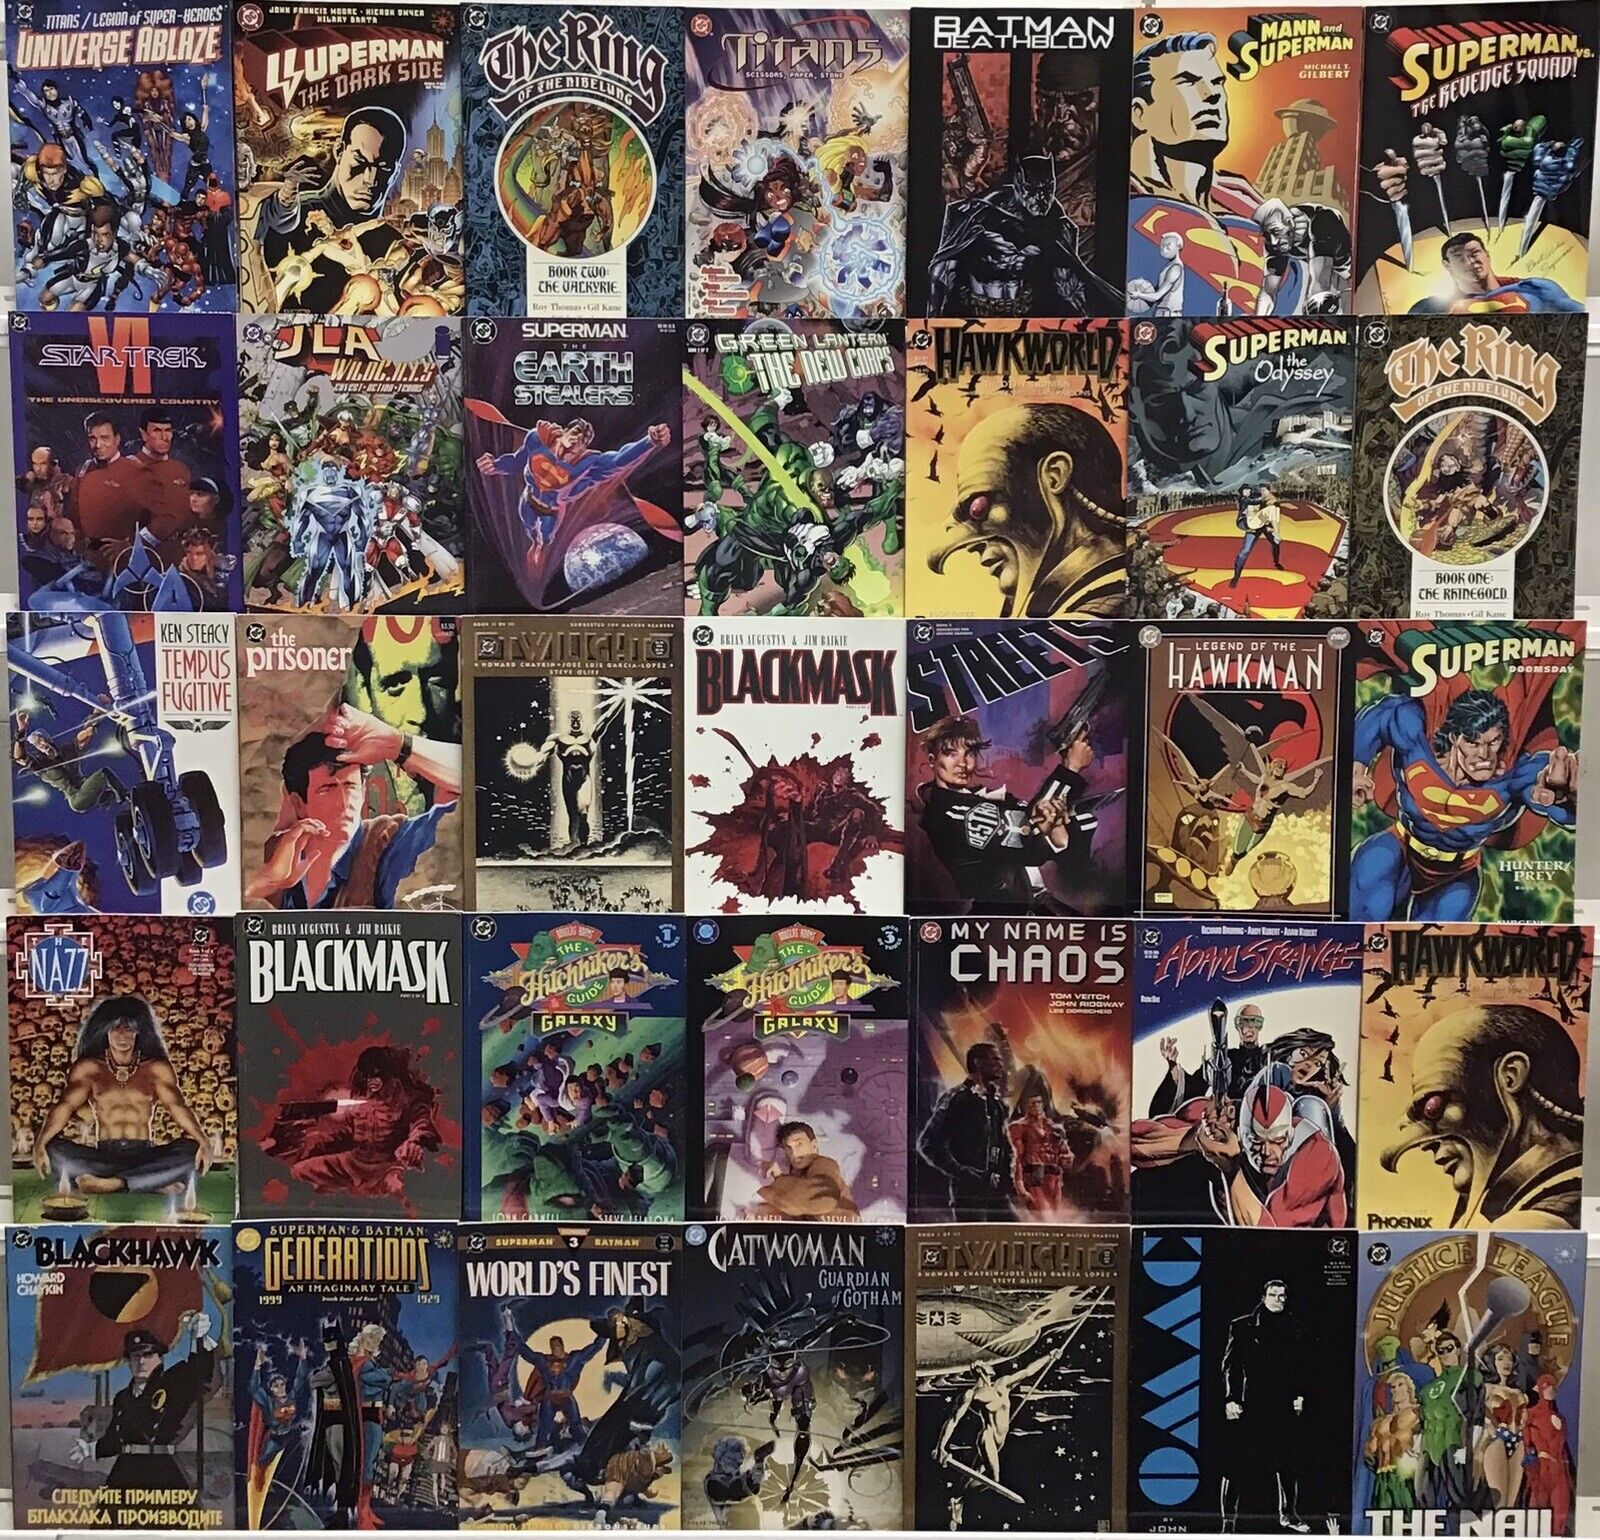 DC Graphic Novels - Black ask, Batman, The Prisoner, Adam Strange - More In Bio